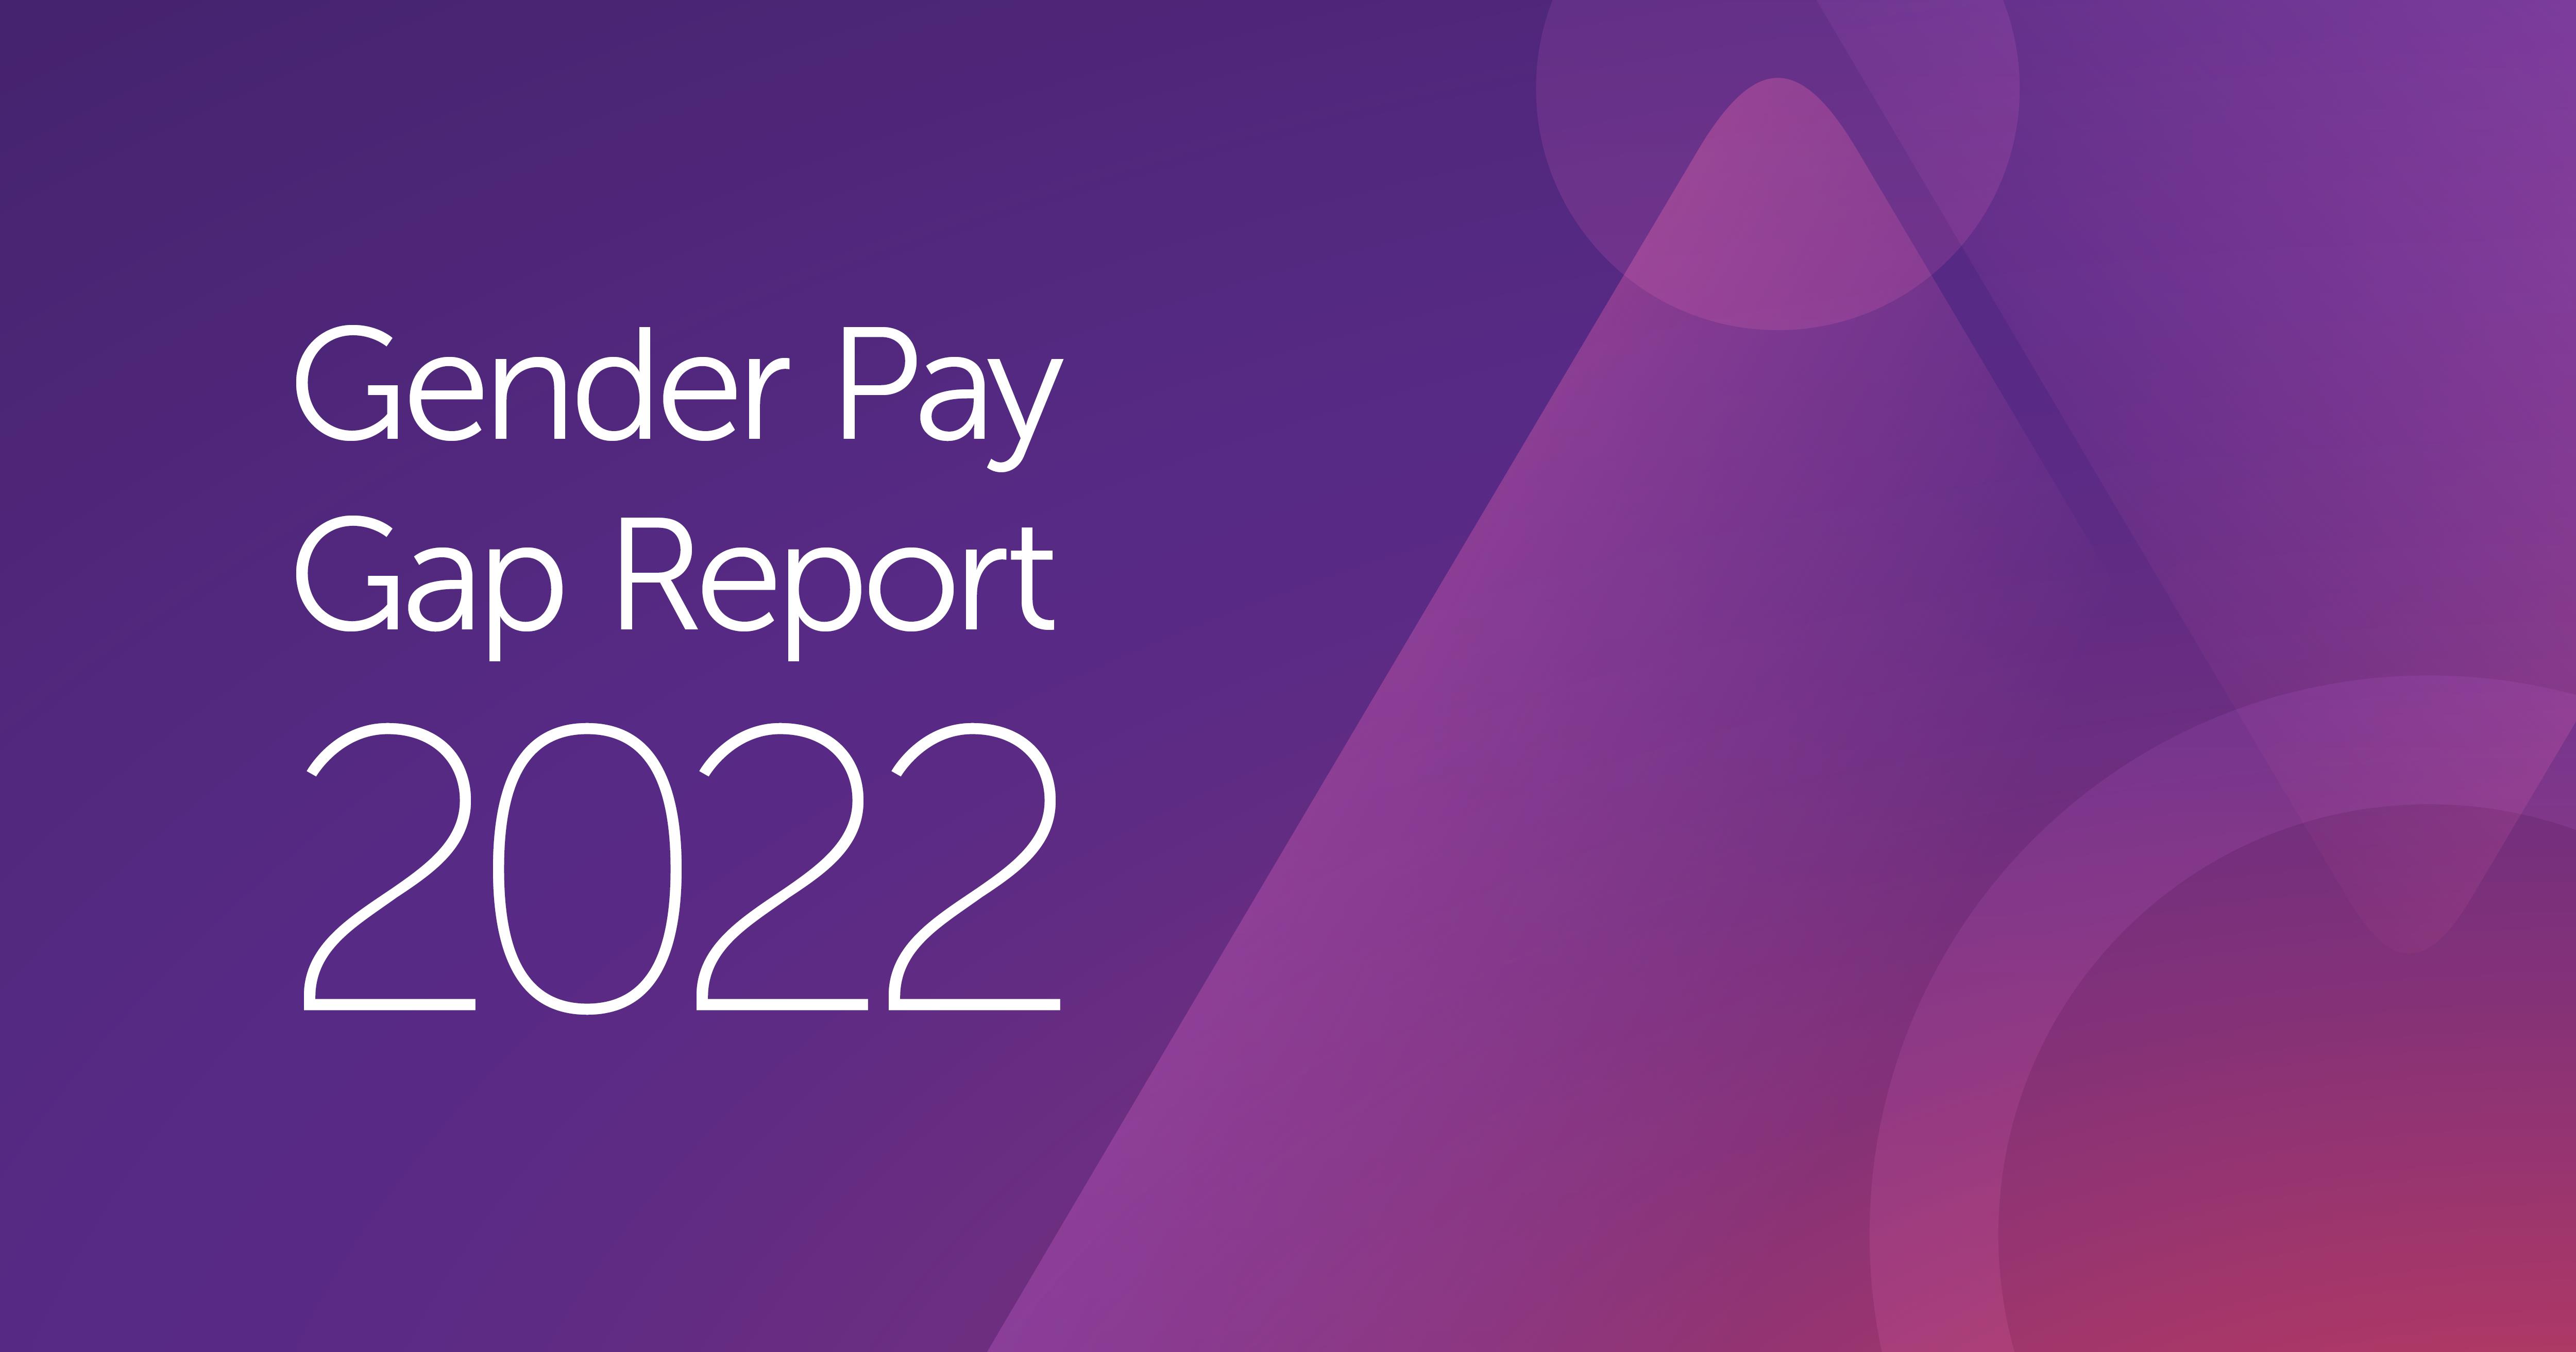 Gender Pay Gap Report 2022 Longhurst Group 6266